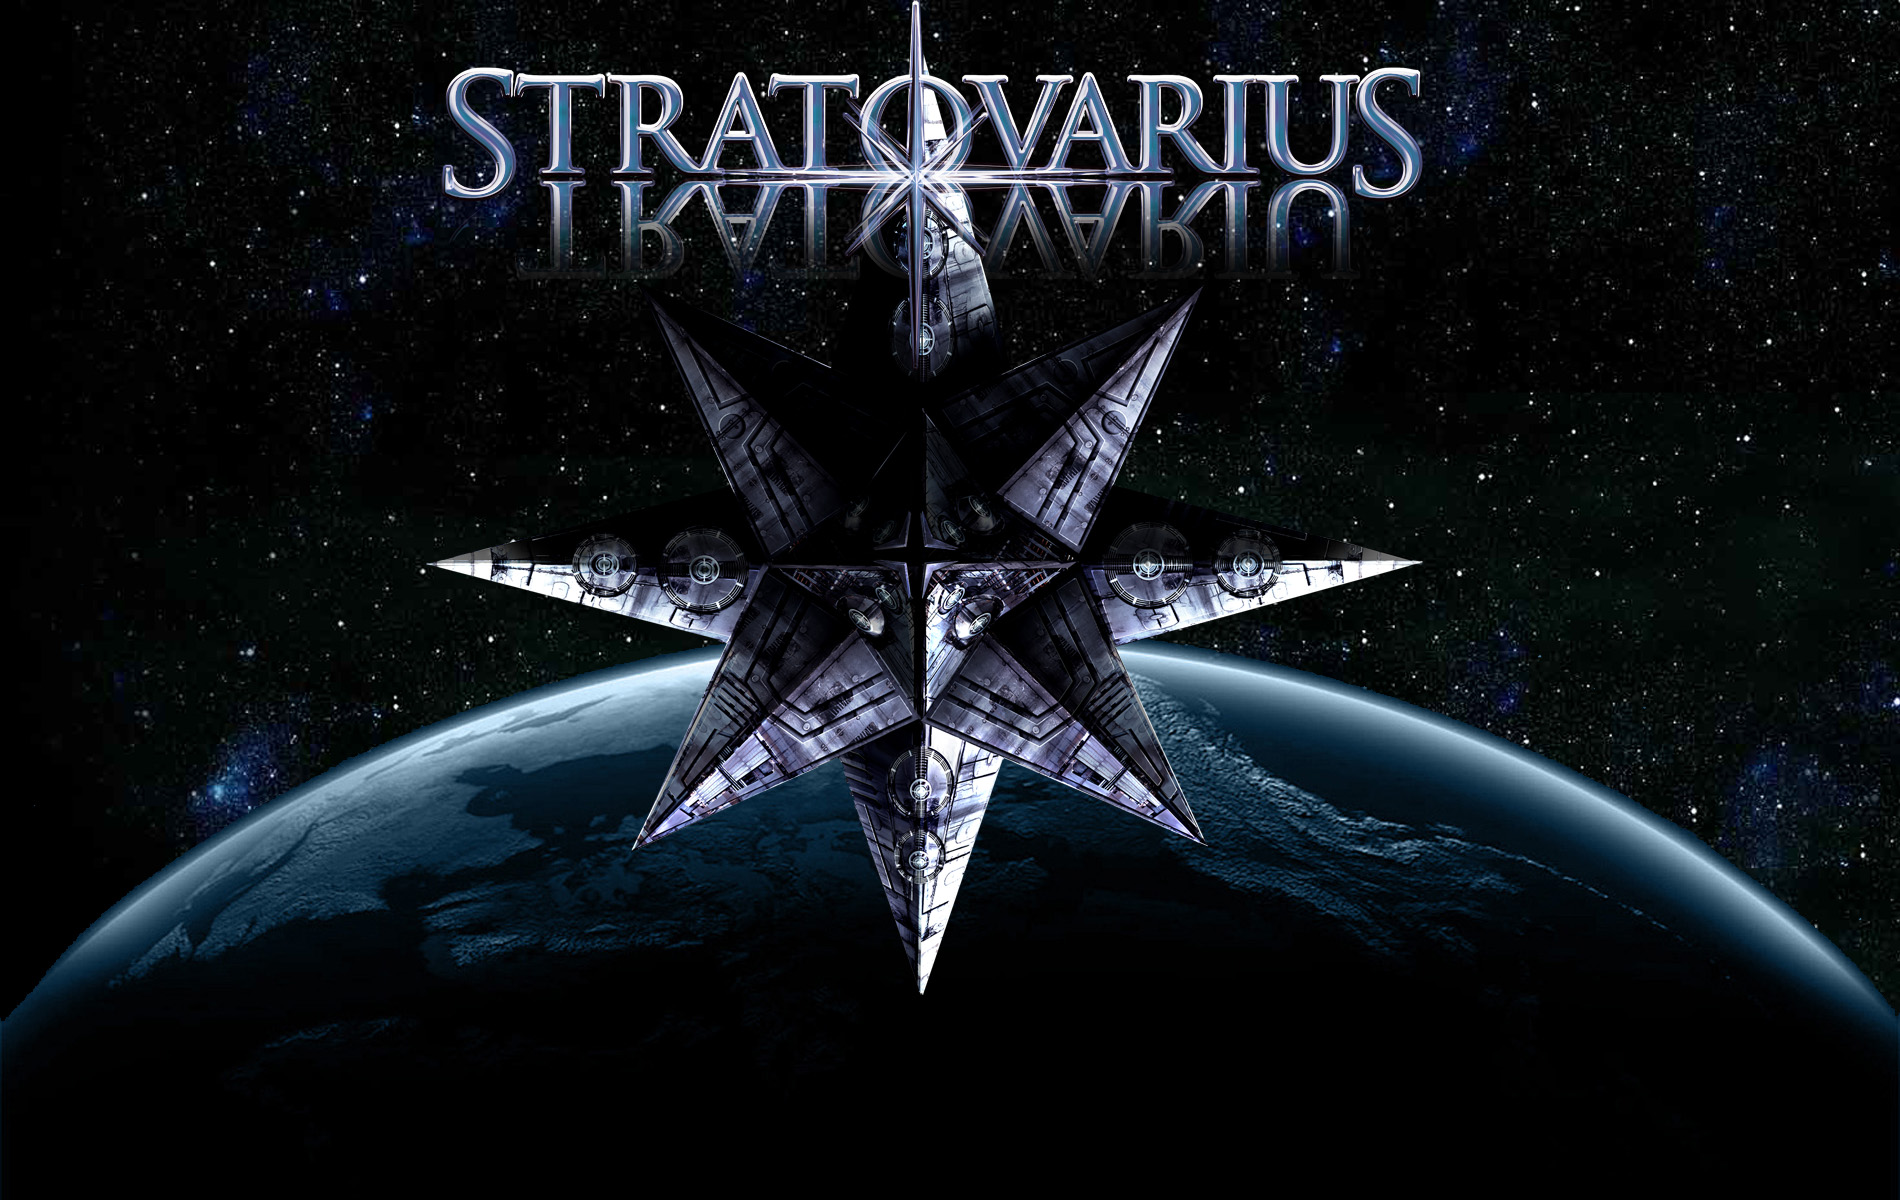 Stratovarius Wallpaper Background Image